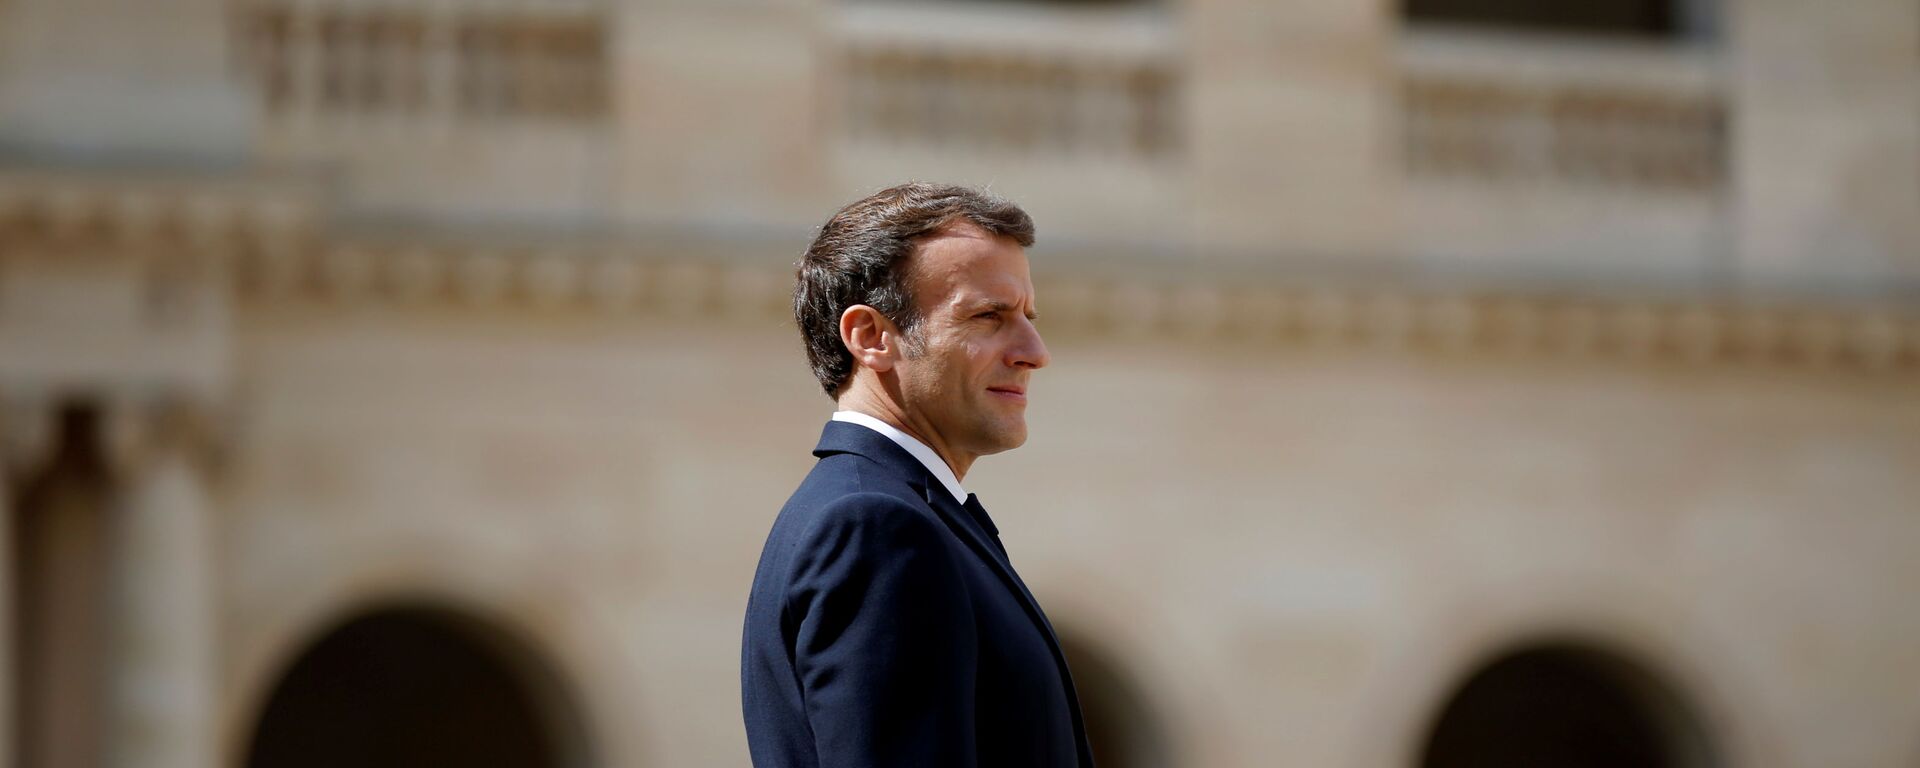 French President Emmanuel Macron attends a prise d'armes military ceremony at the Invalides in Paris, France, July 8, 2021. REUTERS/Sarah Meyssonnier/Pool - Sputnik International, 1920, 22.07.2021